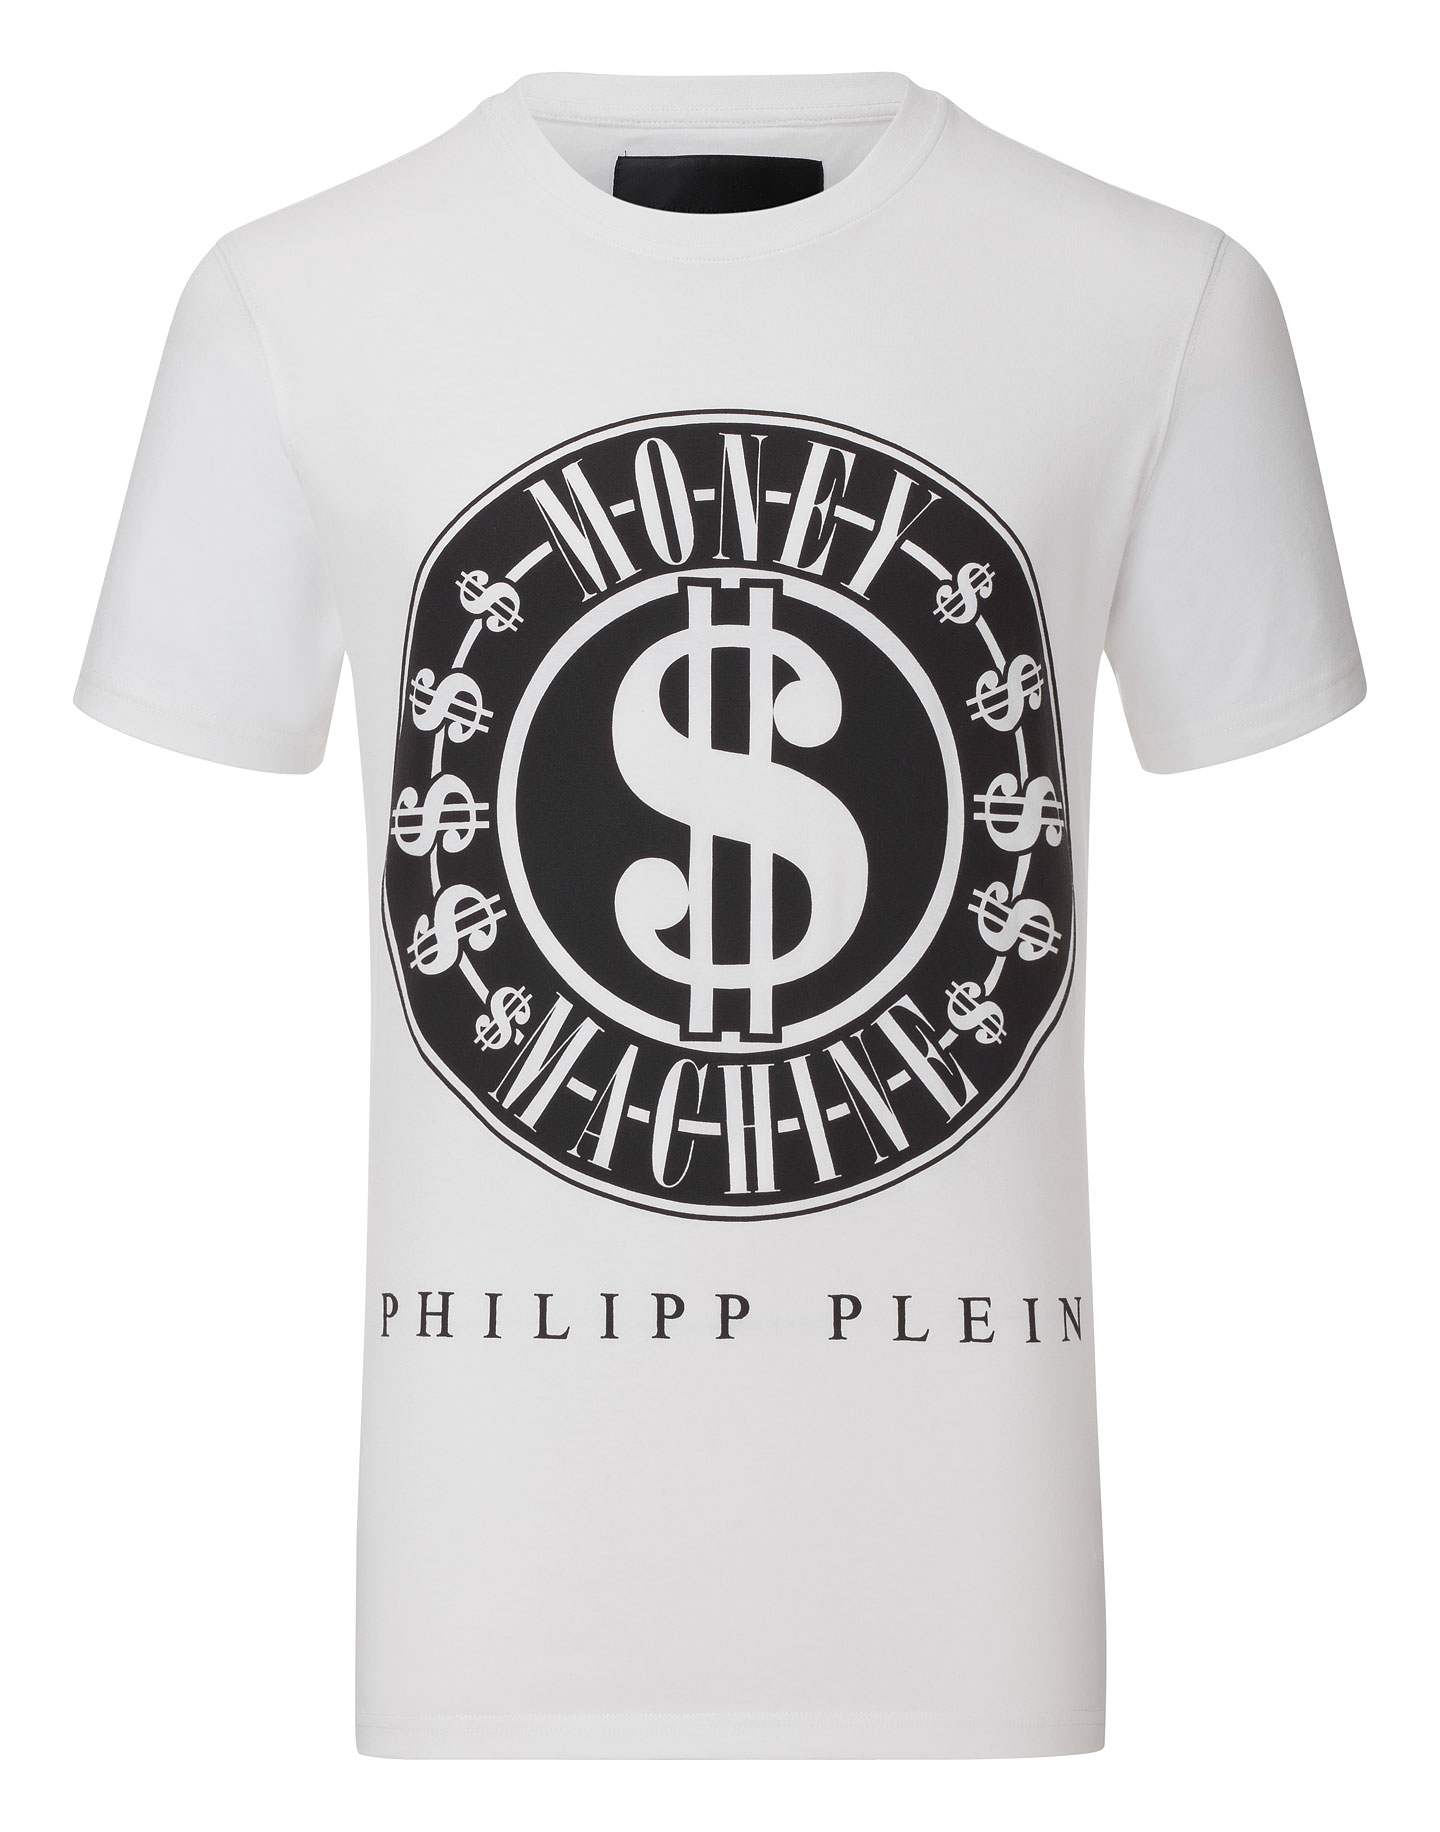 philipp plein money man